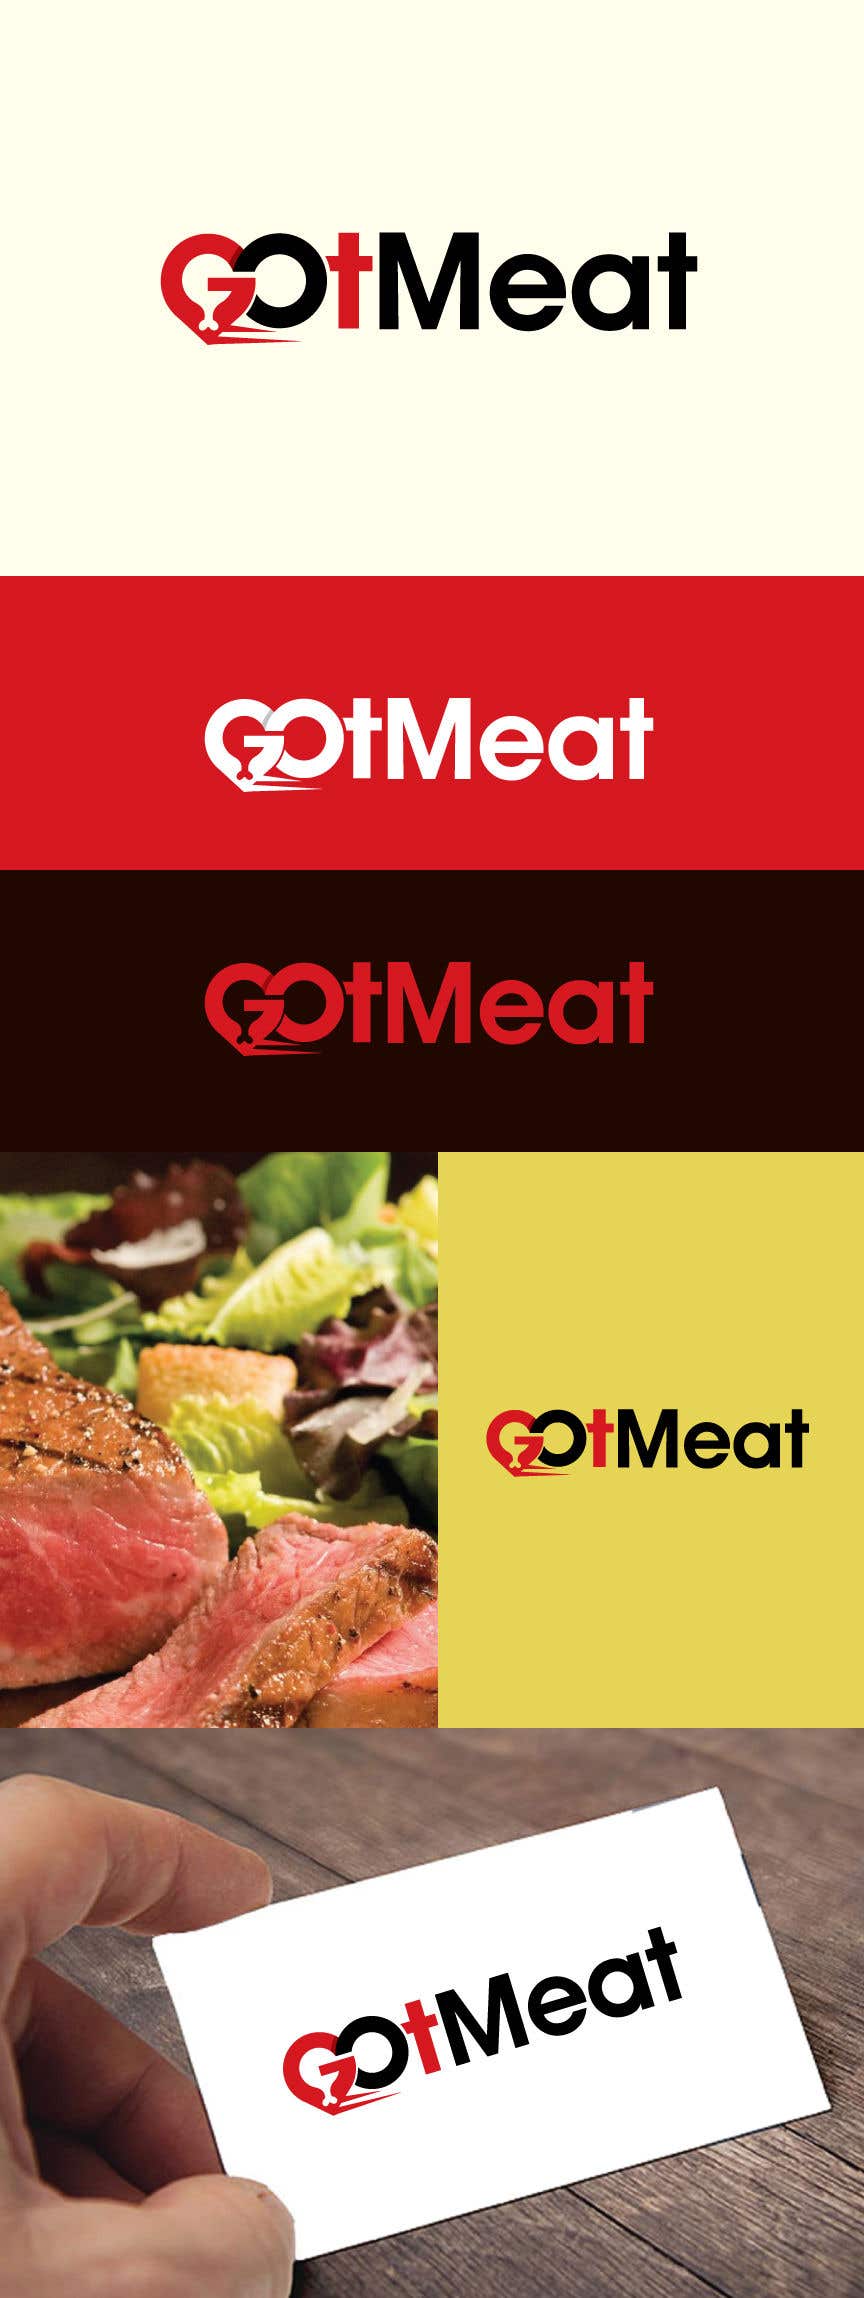 Entri Kontes #59 untuk                                                Design a Logo for "GotMeat?"
                                            